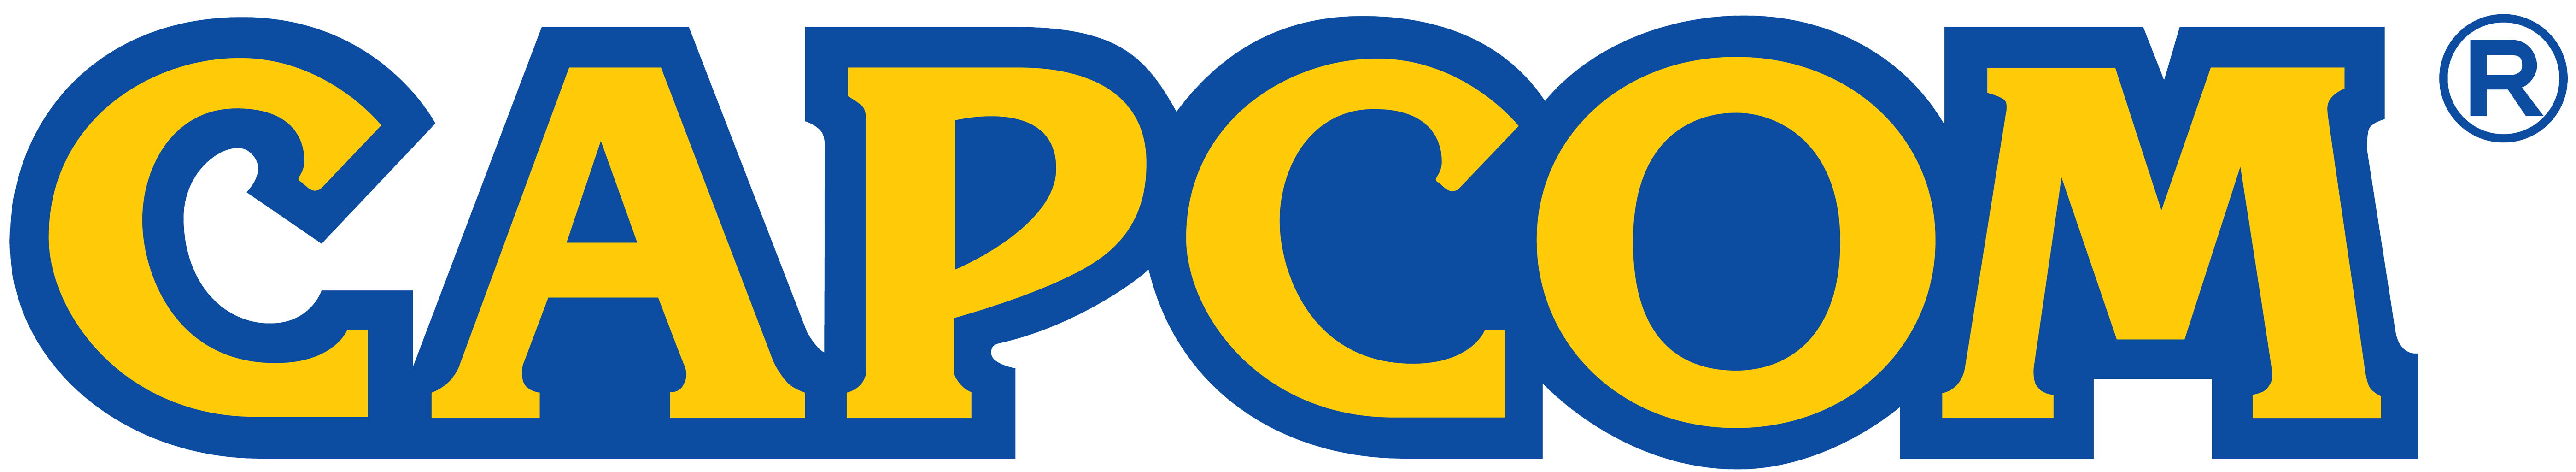 Capcom s’agrandit avec deux centres de R&D